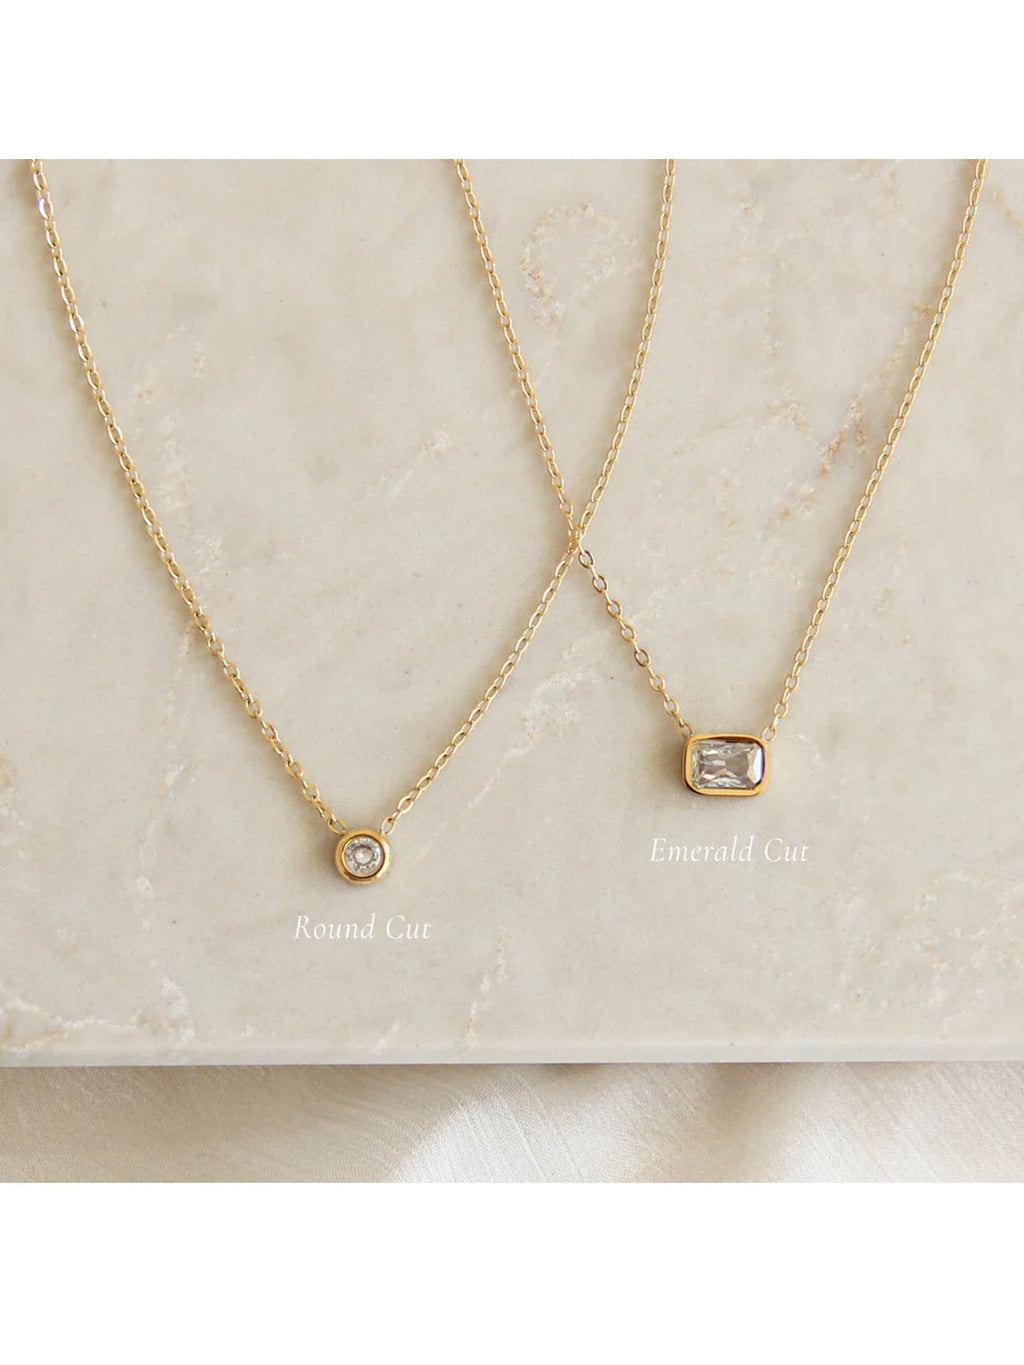 Gold Bezel Emerald Stone Necklace 6mm